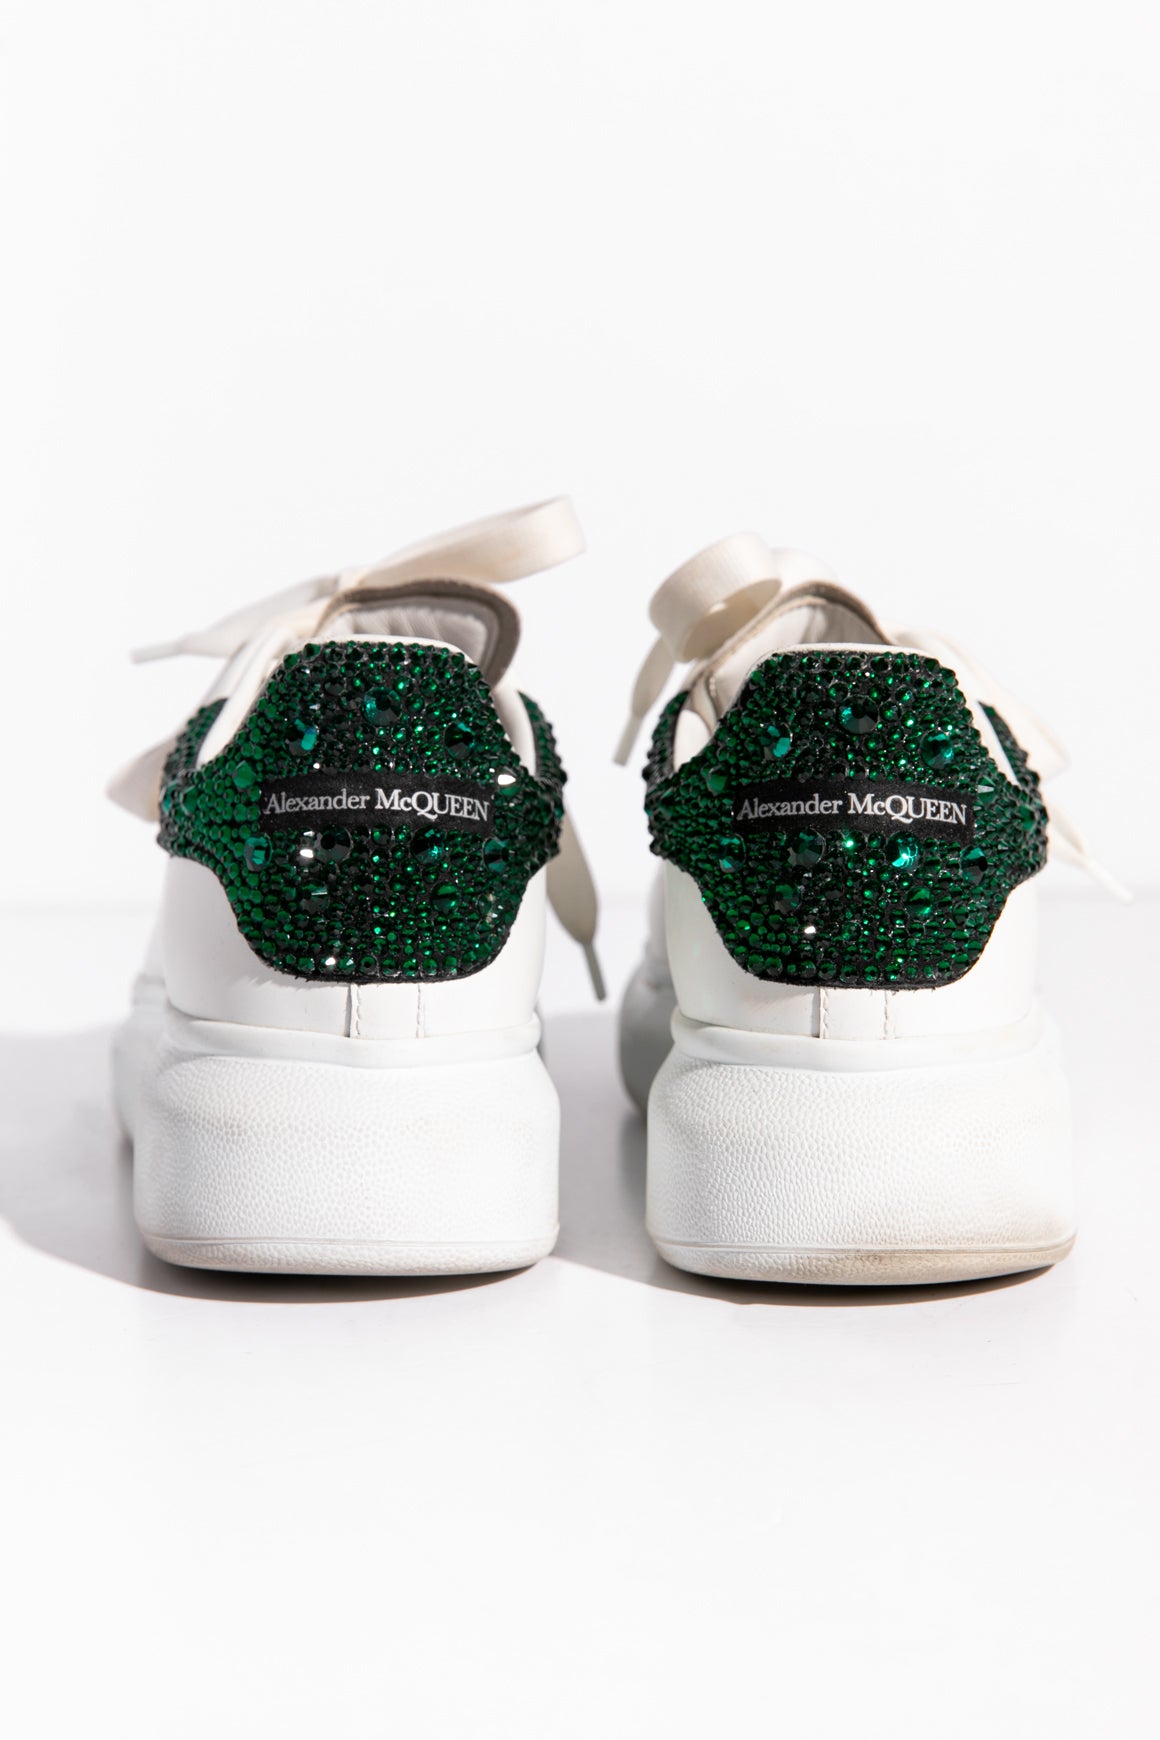 ALEXANDER MCQUEEN White & Green Sneakers (Sz. 38) | MOSS Consignment